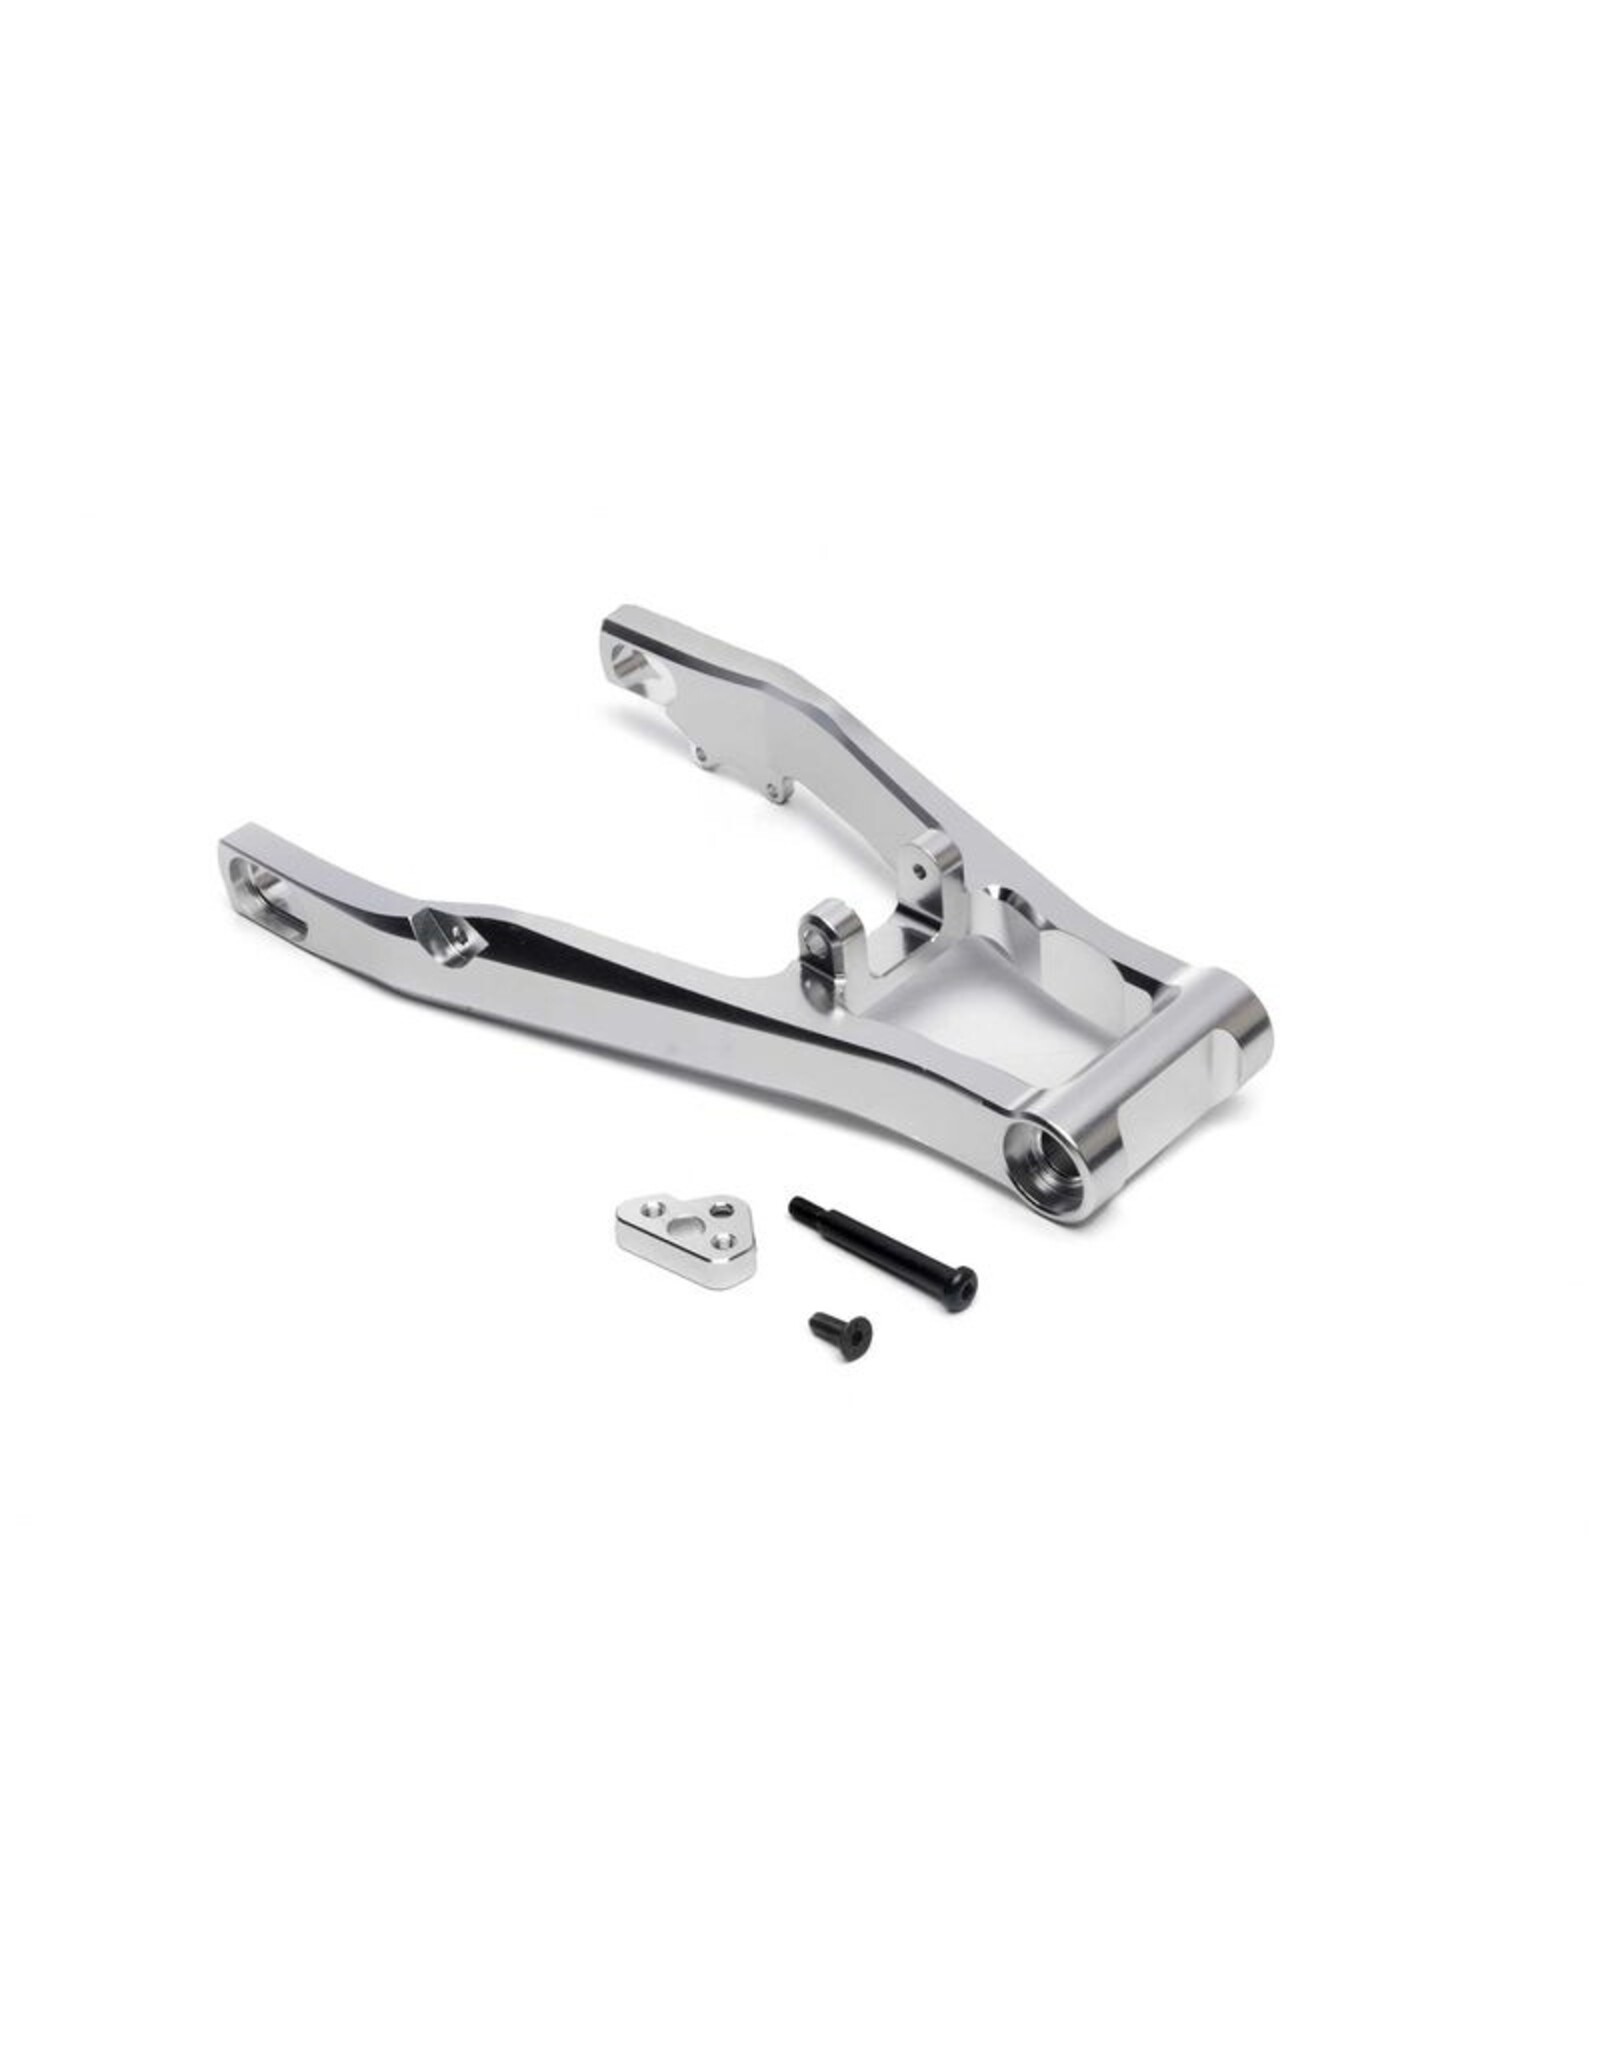 Losi LOS364000 Aluminum Swing Arm, Silver: PM-MX